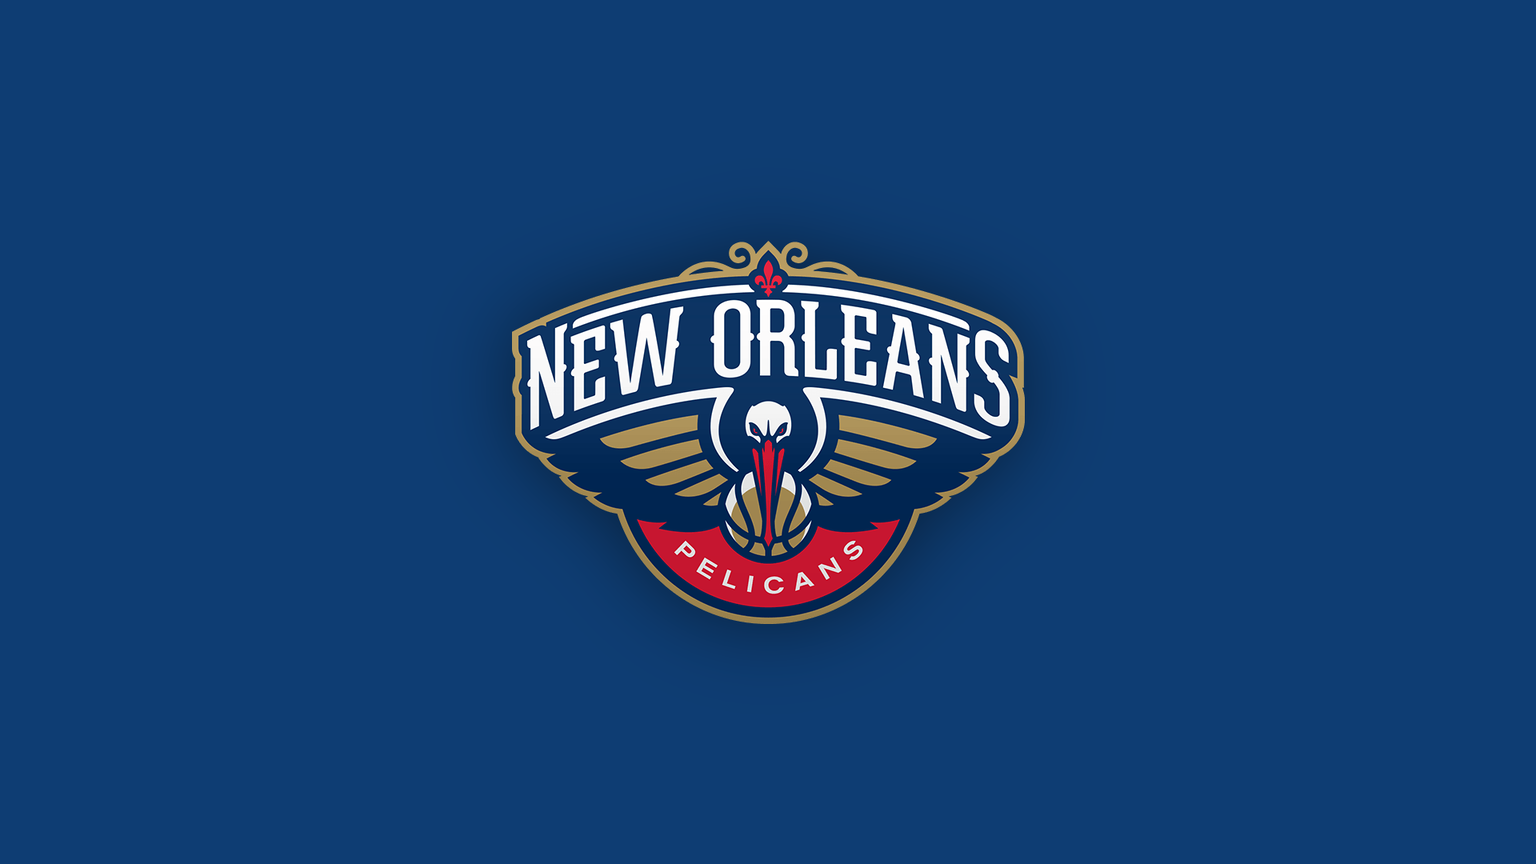 New Orleans Pelicans Banner 1536x864 Crop 